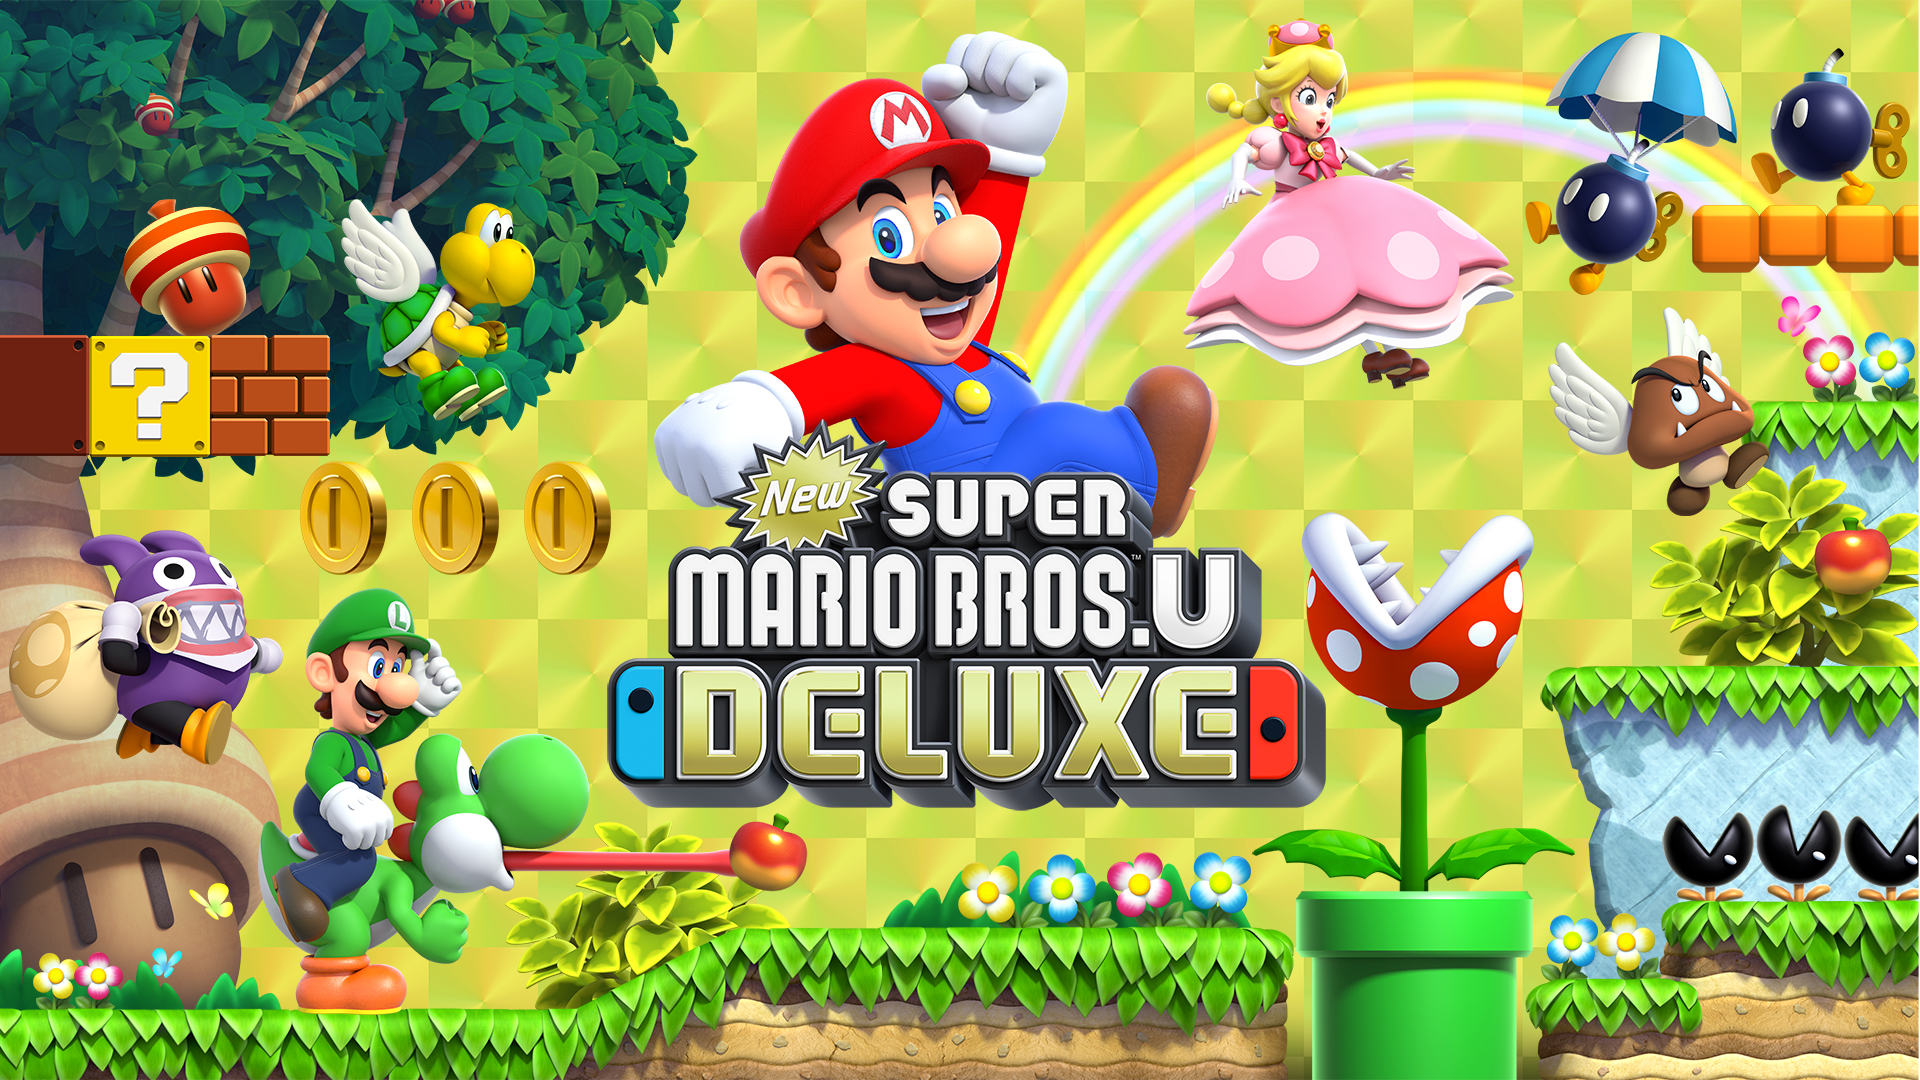 Nintendo Switch - New Super Mario Bros. U Deluxe 新超級瑪利奧兄弟U豪華版 (中英日文版) 1